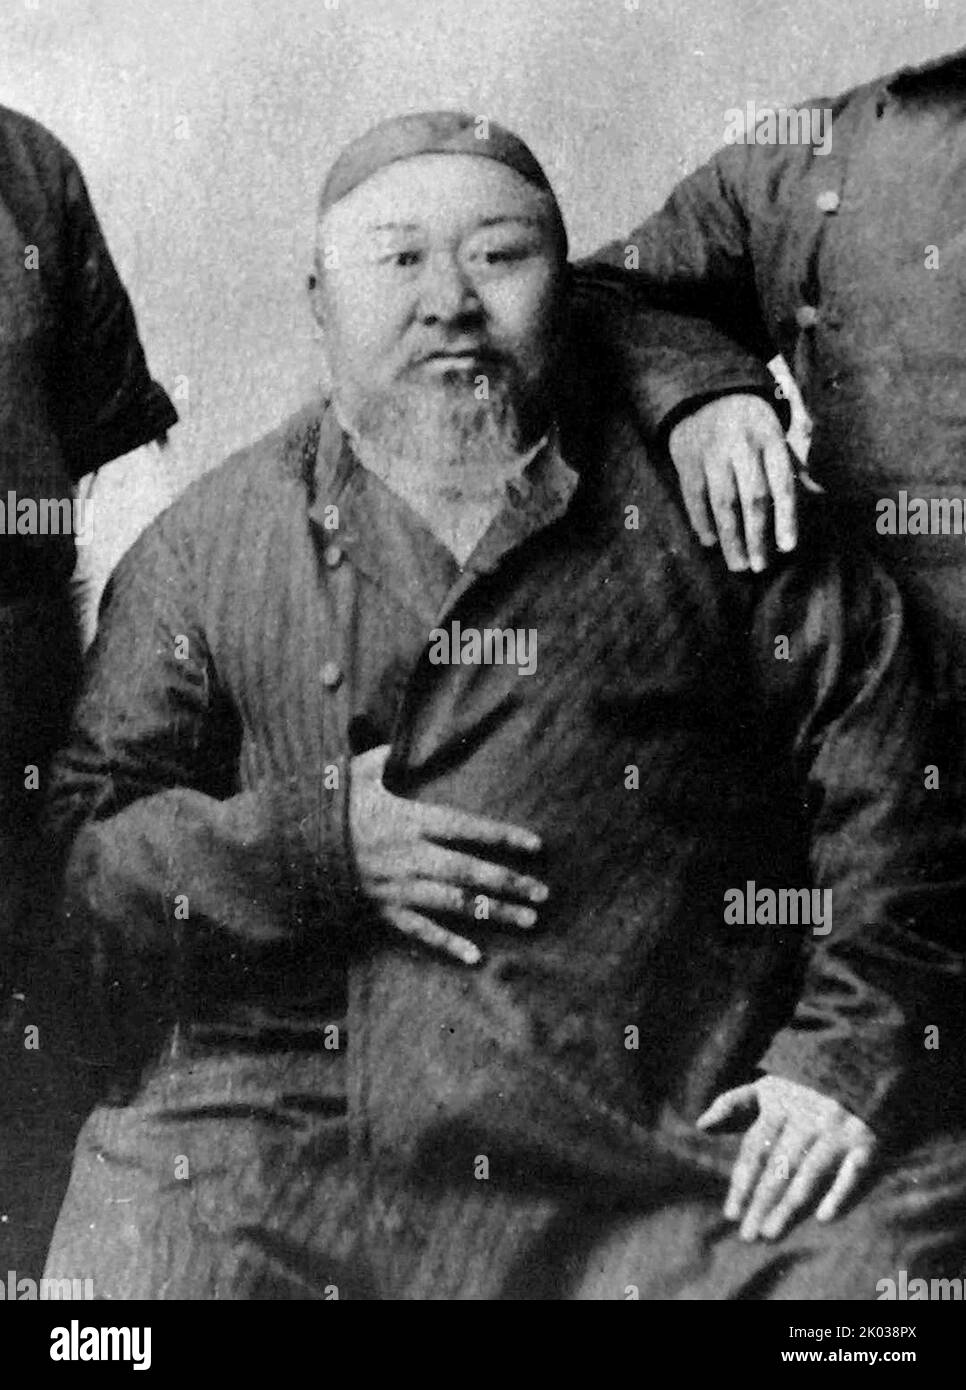 Ibrahim (Abai) Qunanbaiuly (1845 - 1904) was a Kazakh poet, composer and Hanafi Maturidi theologian philosopher. Stock Photo